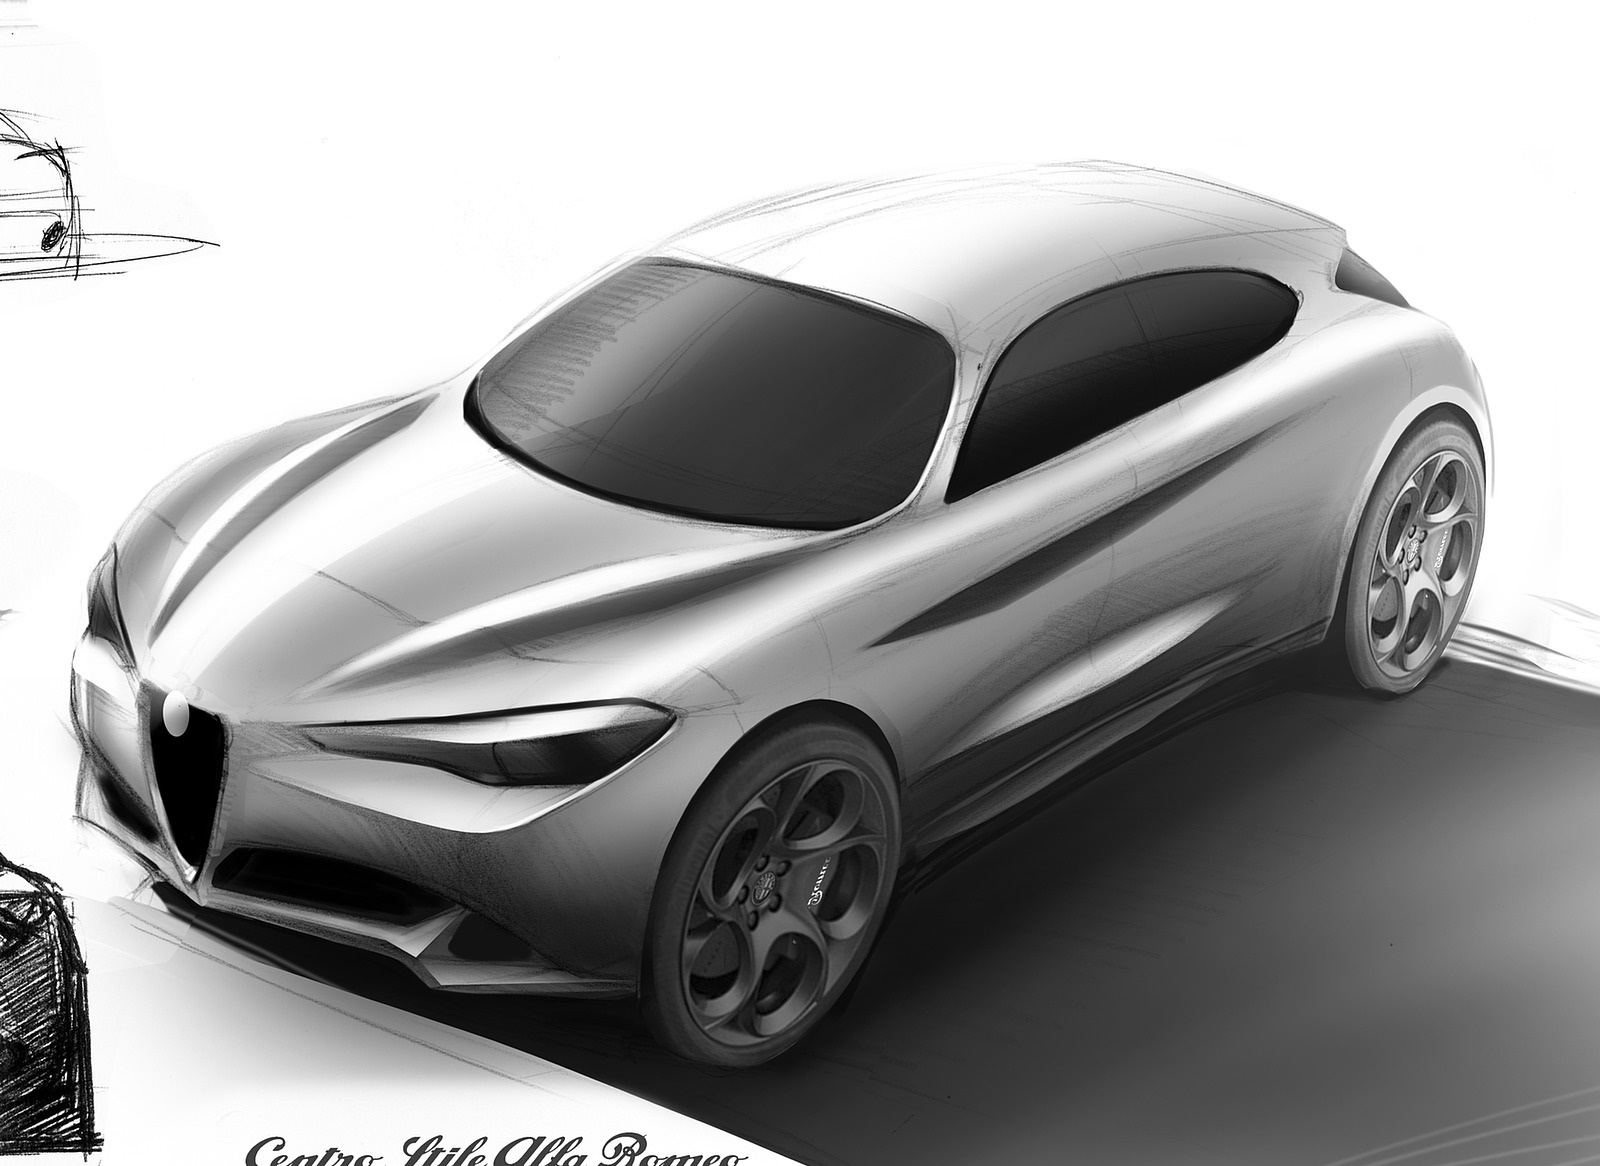 2018 Alfa Romeo Stelvio Design Sketch Wallpapers #39 of 46